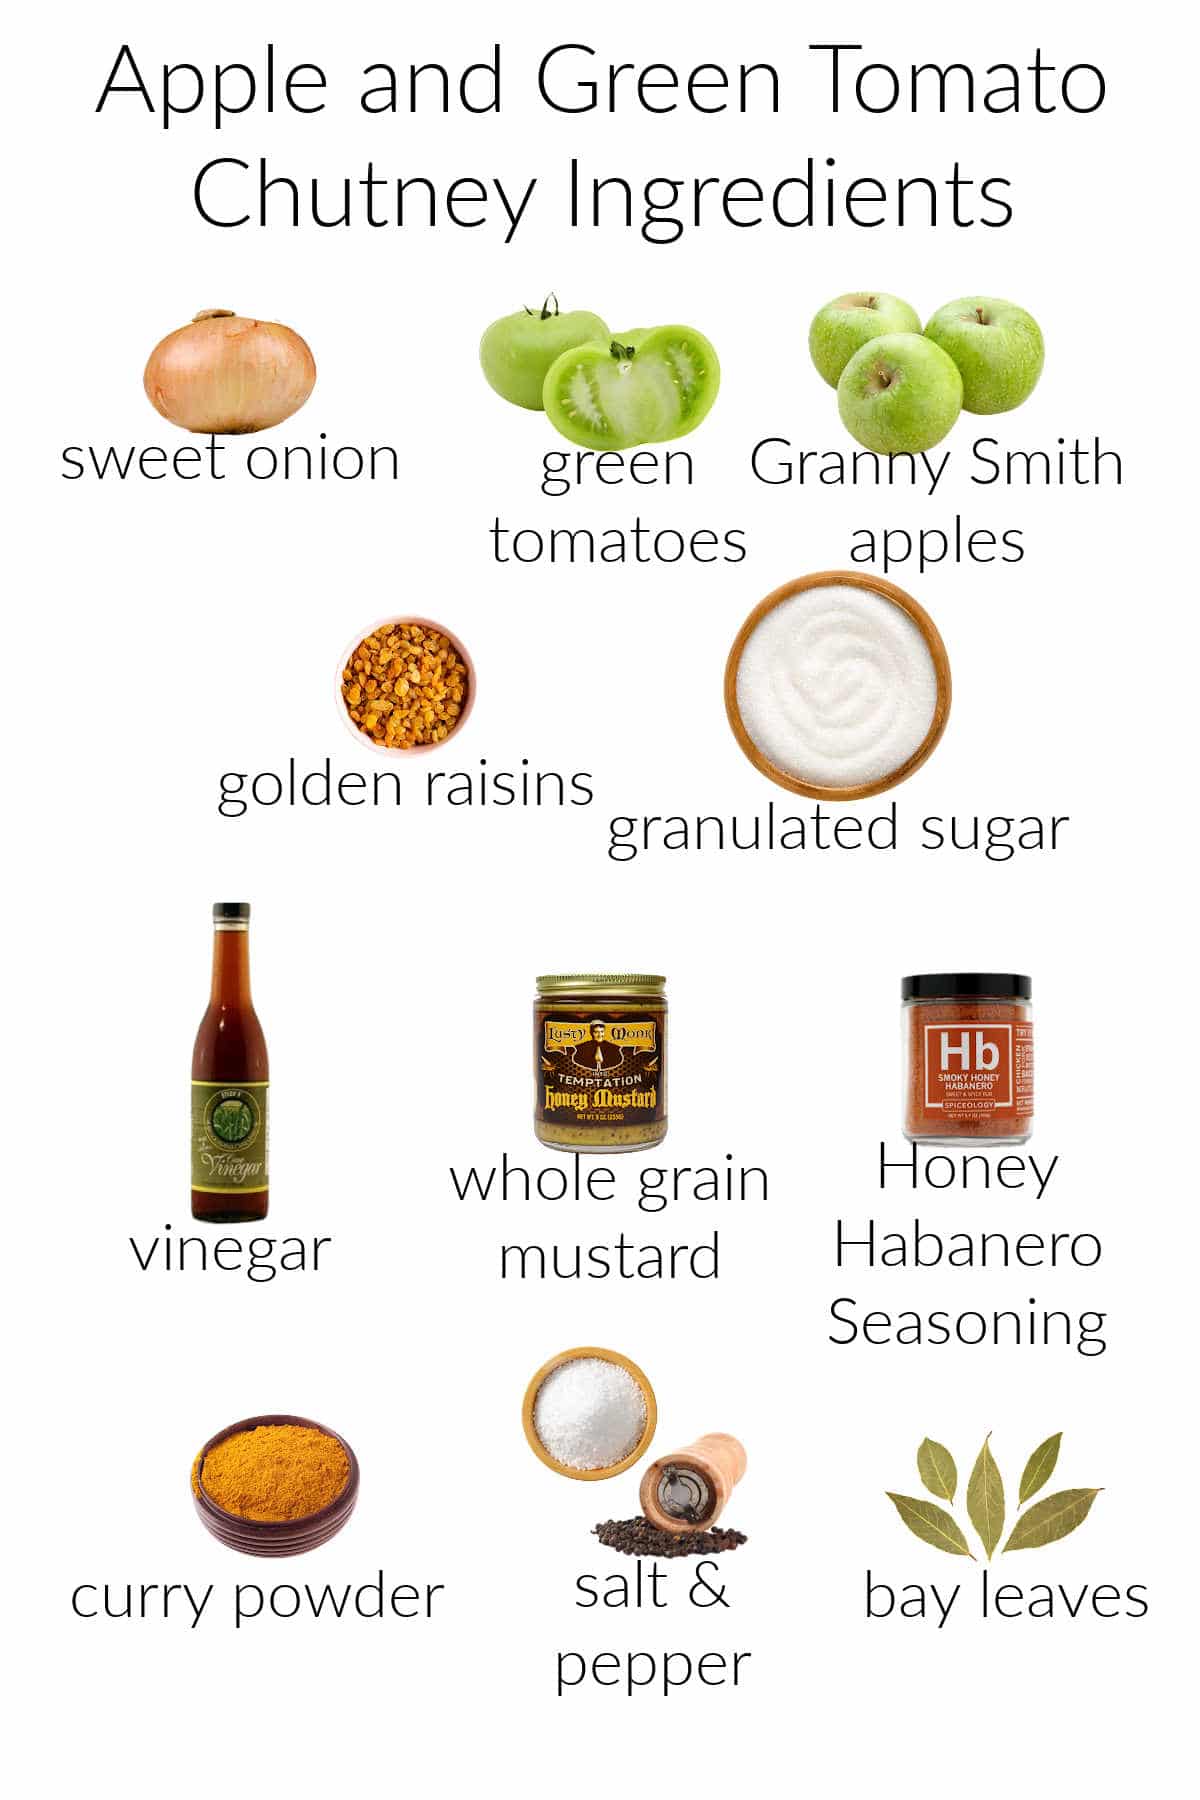 Collage of ingredients for making apple green tomato chutney: onions, green tomatoes, green apples, golden raisins, sugar, vinegar, mustard, honey habanero seasoning, curry powder, salt & pepper, and bay leaf.